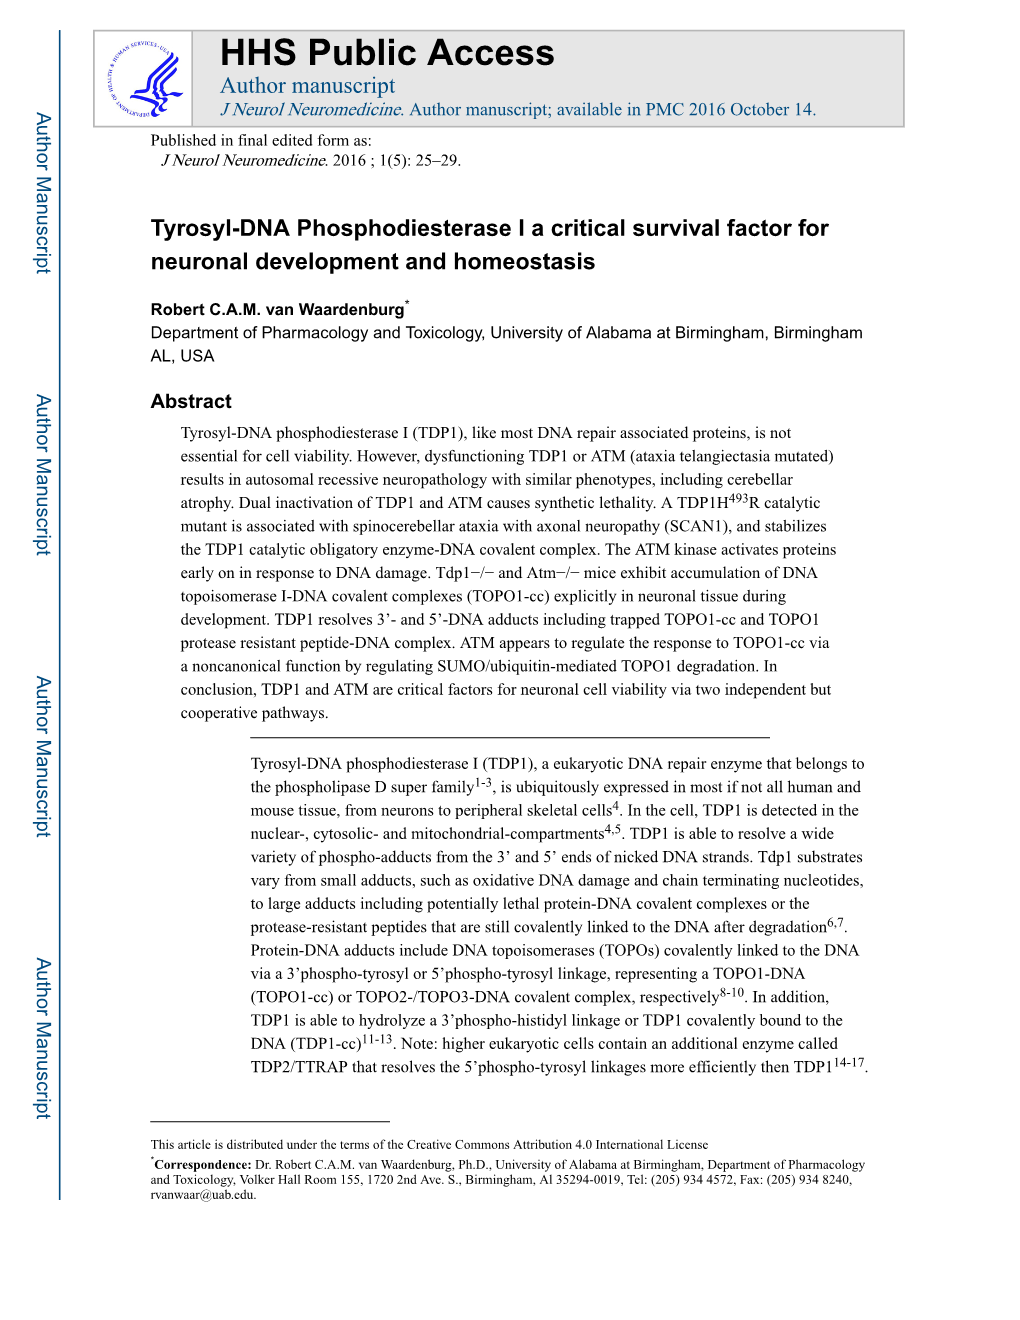 Tyrosyl-DNA Phosphodiesterase I a Critical Survival Factor for Neuronal Development and Homeostasis